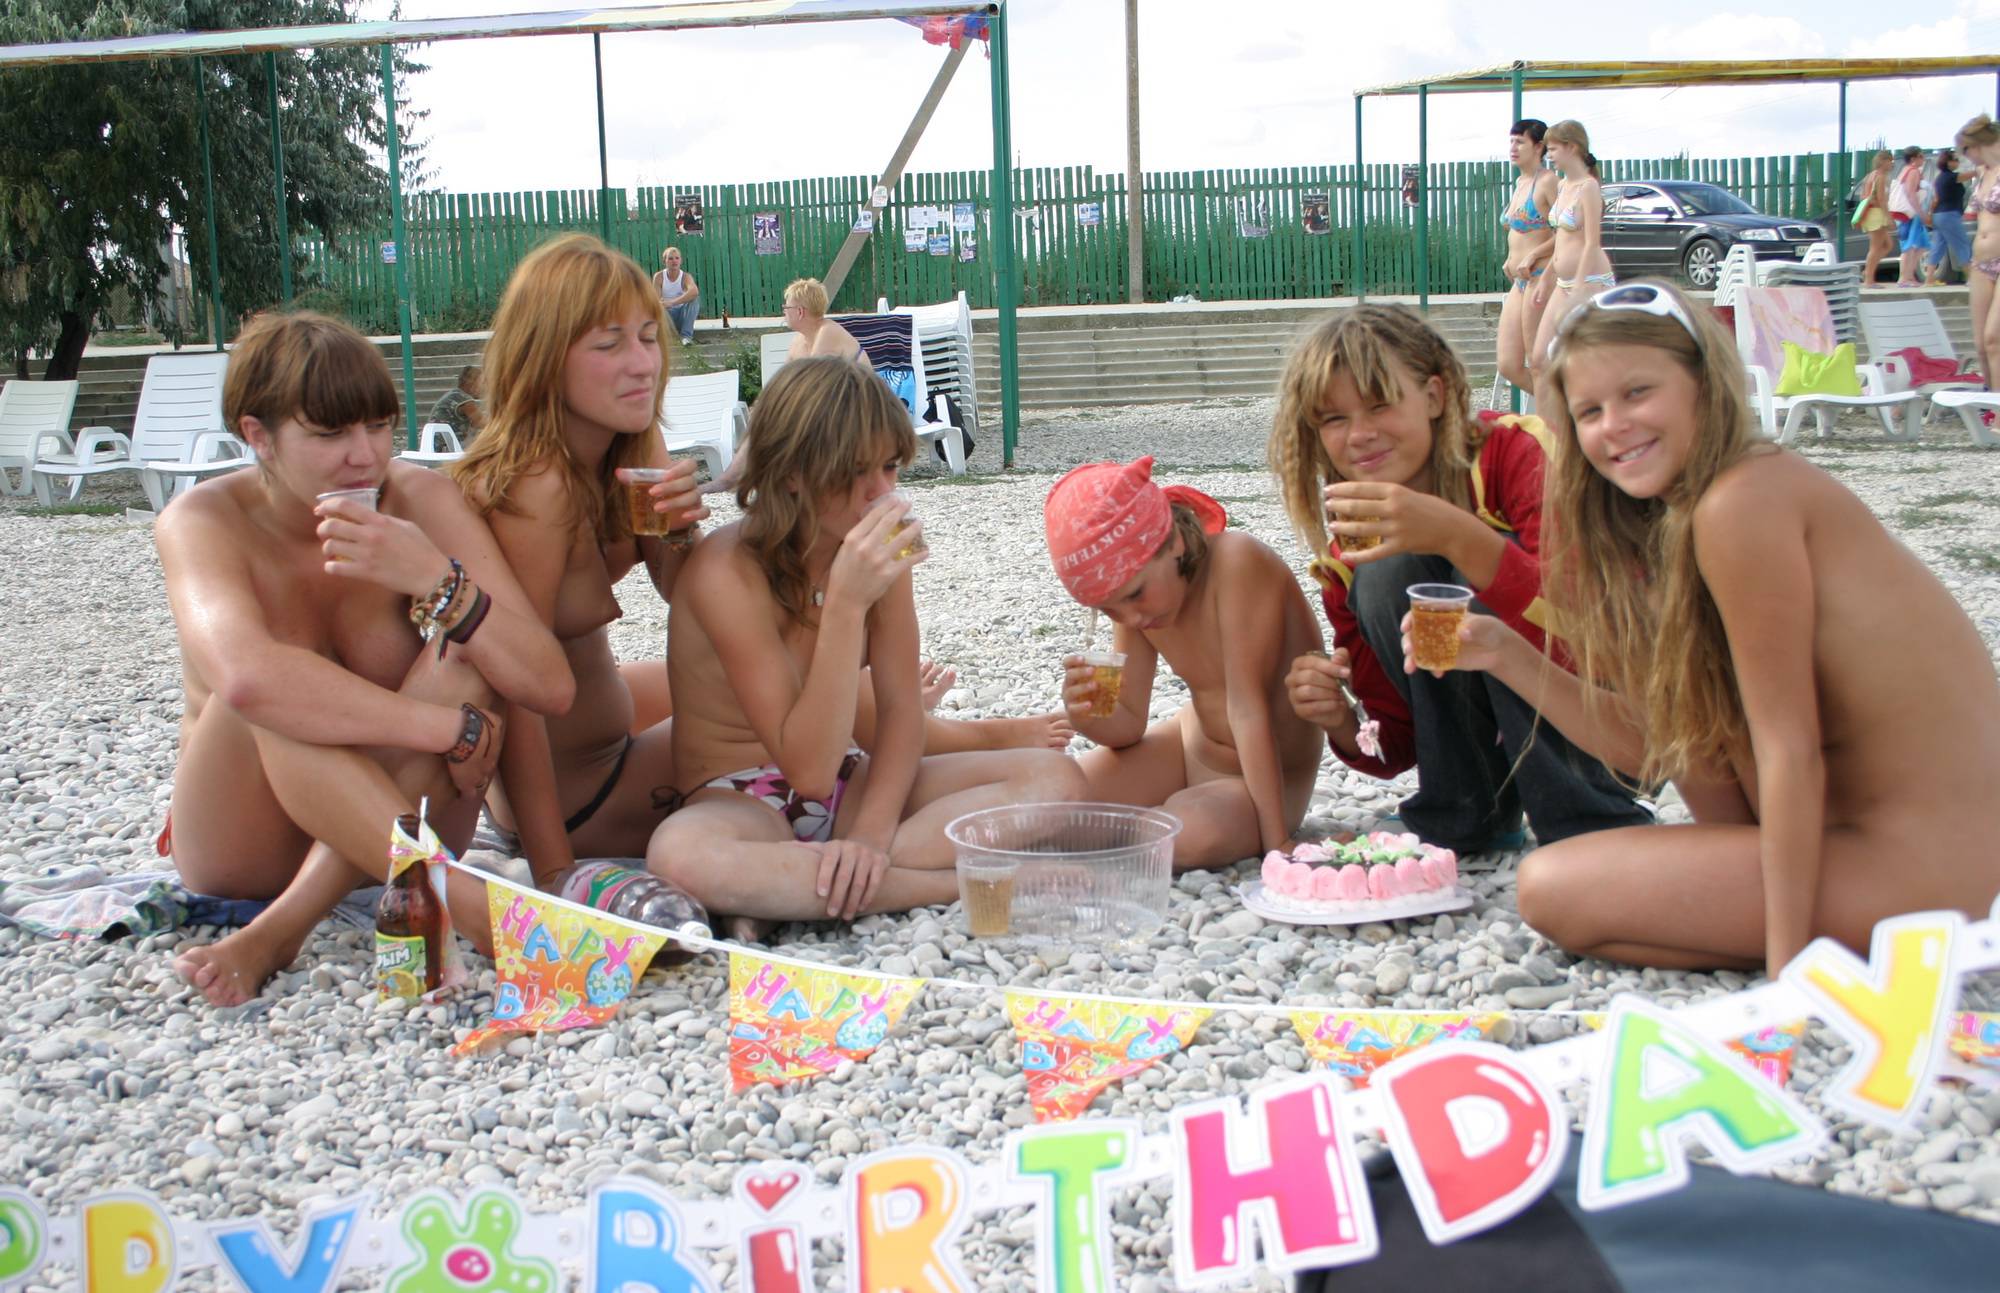 Purenudism Photos-Happy Birthday Shore Party - 1